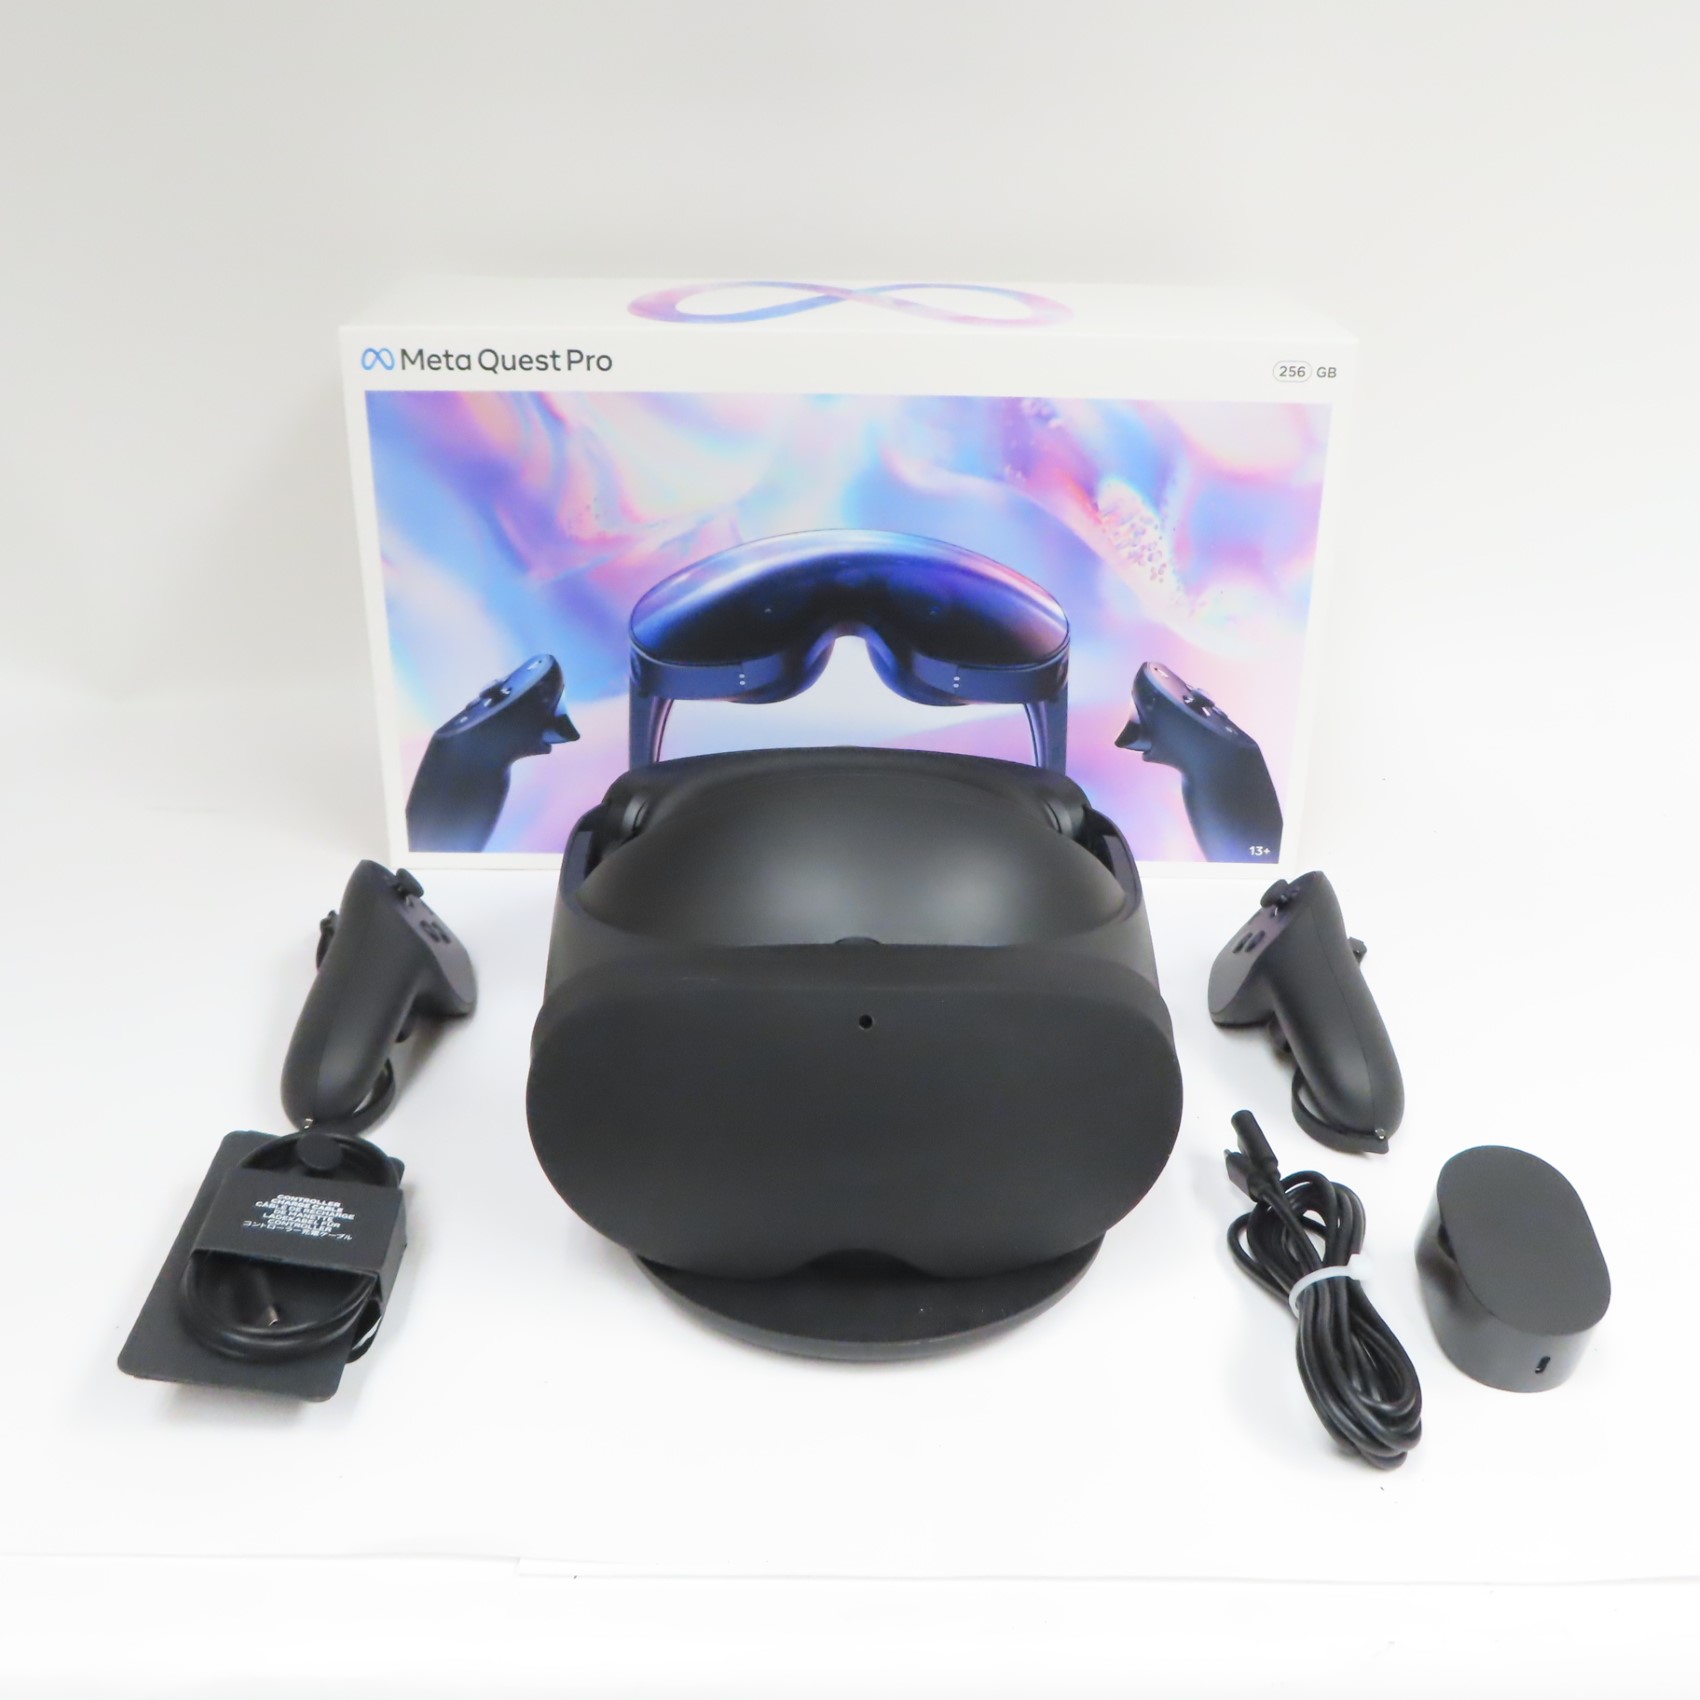 Meta 891-00701-01 Quest Pro 256GB Standalone Virtual Reality